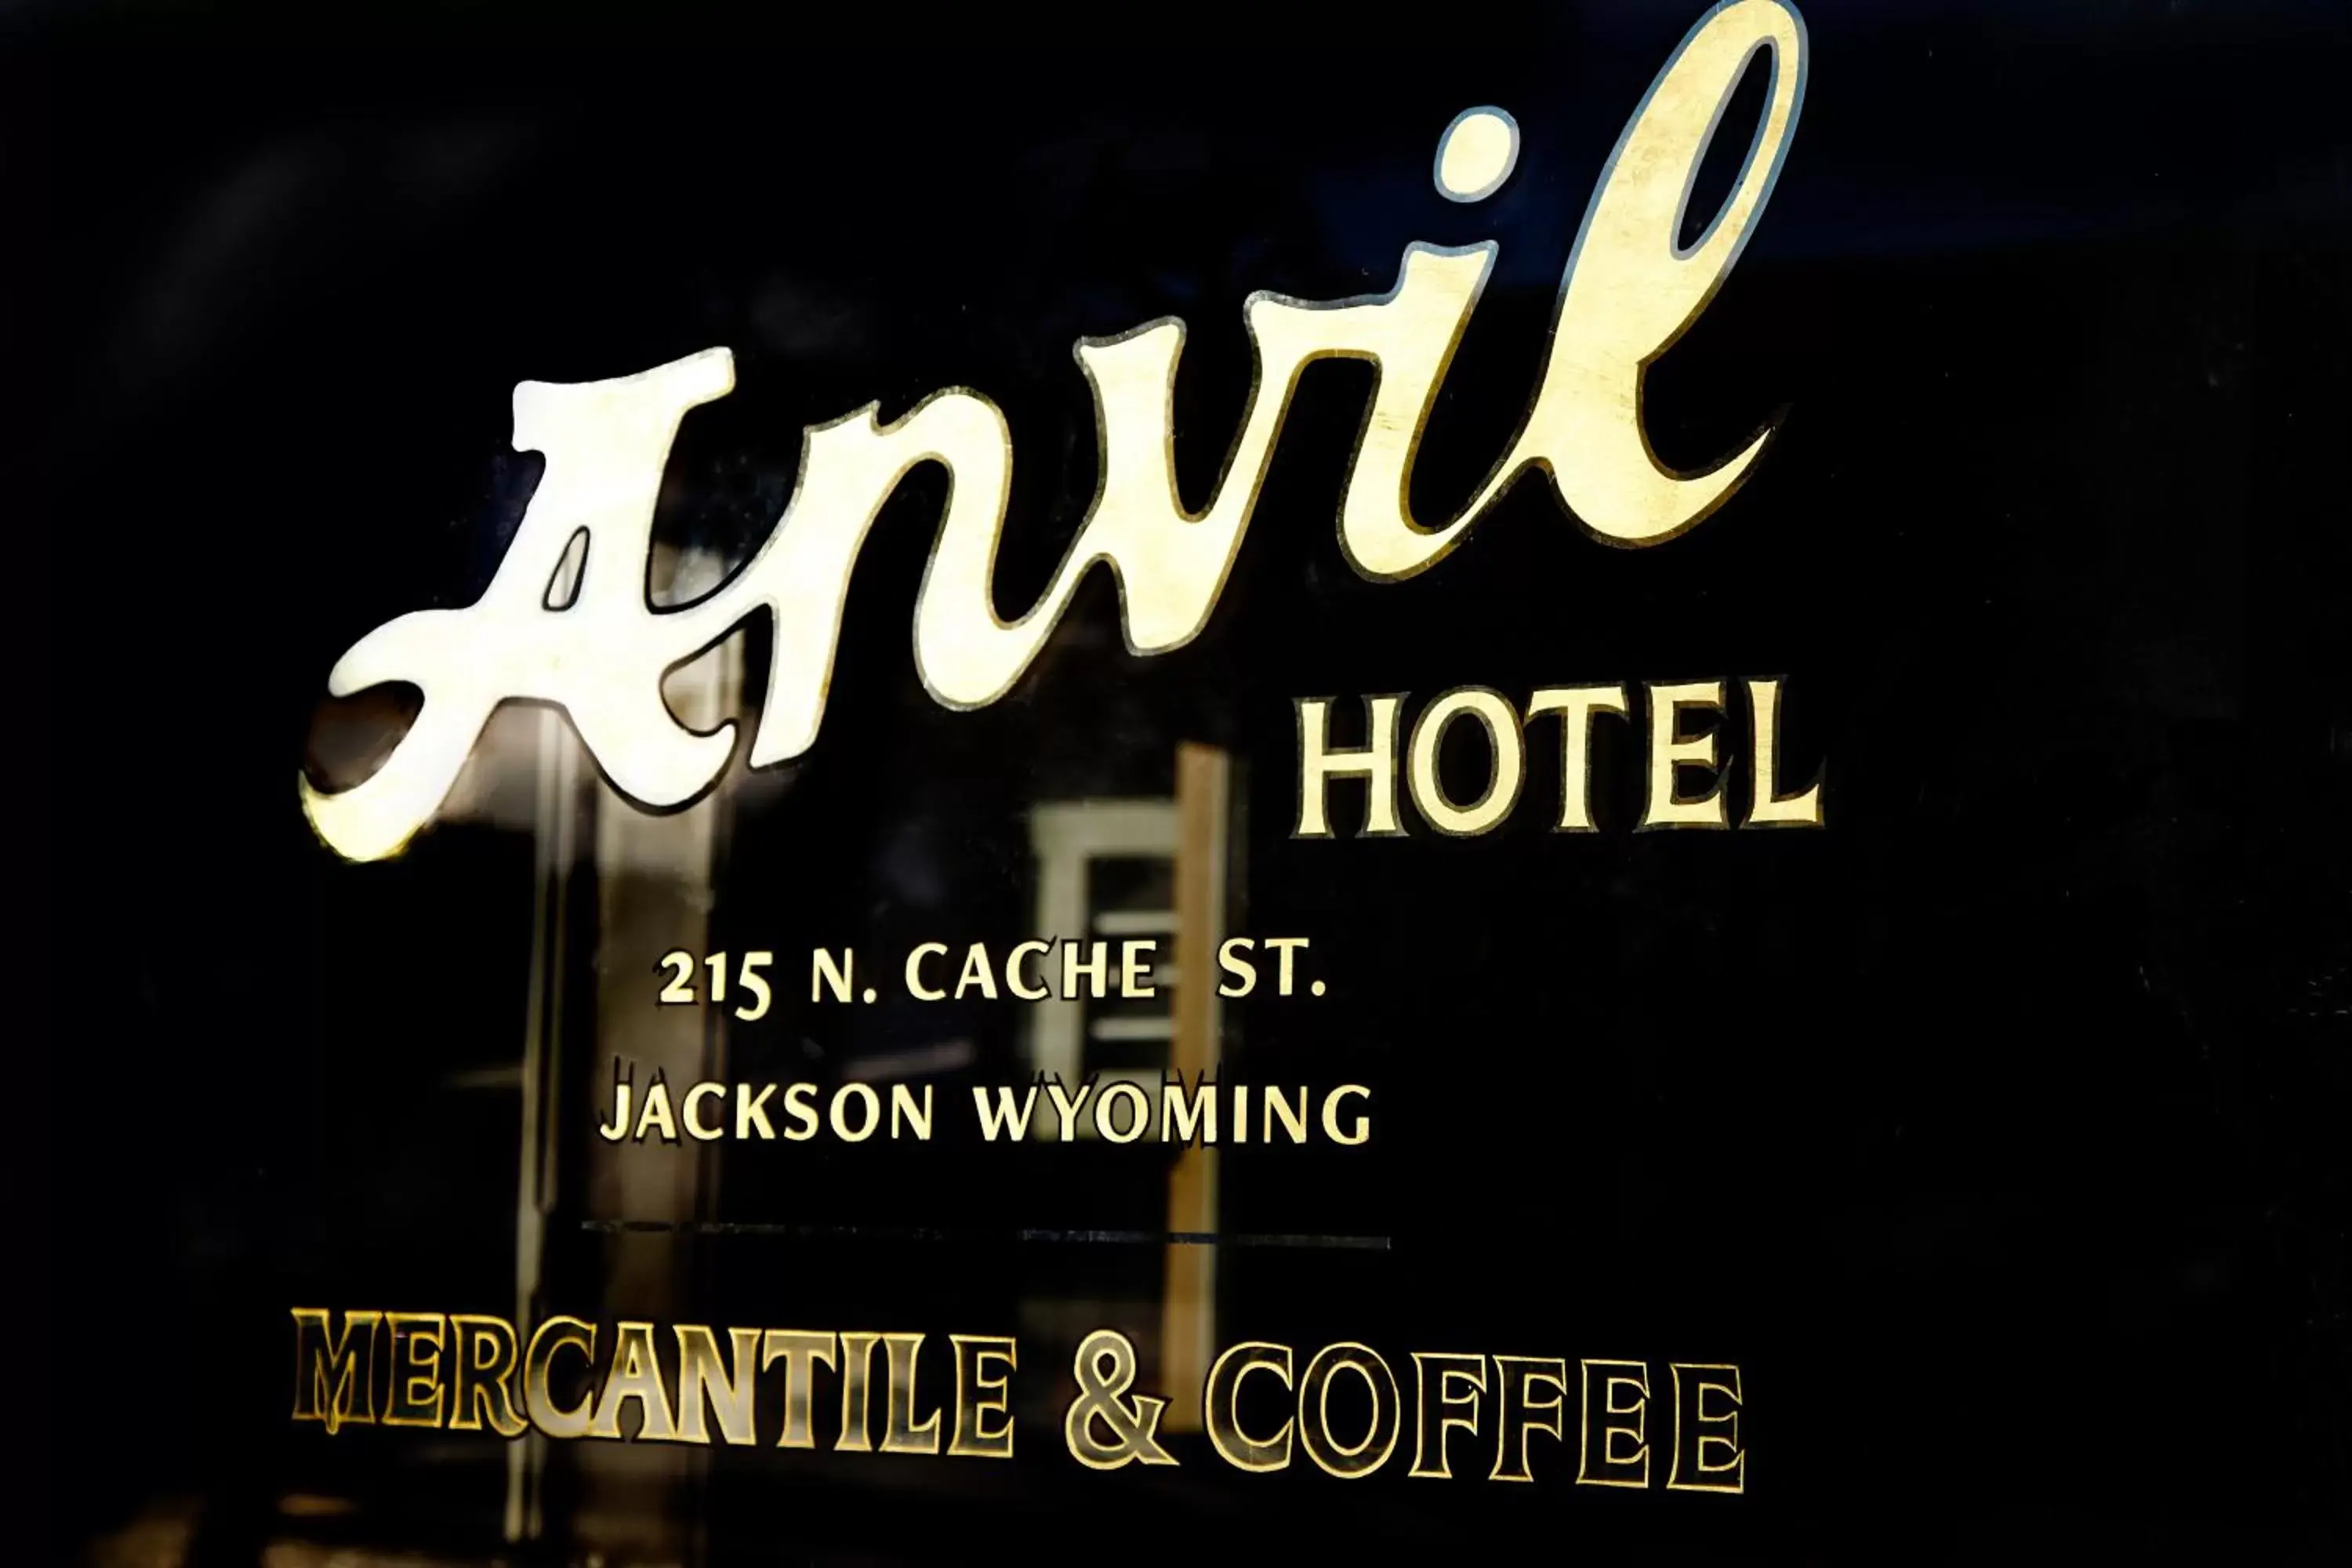 Property logo or sign in Anvil Hotel